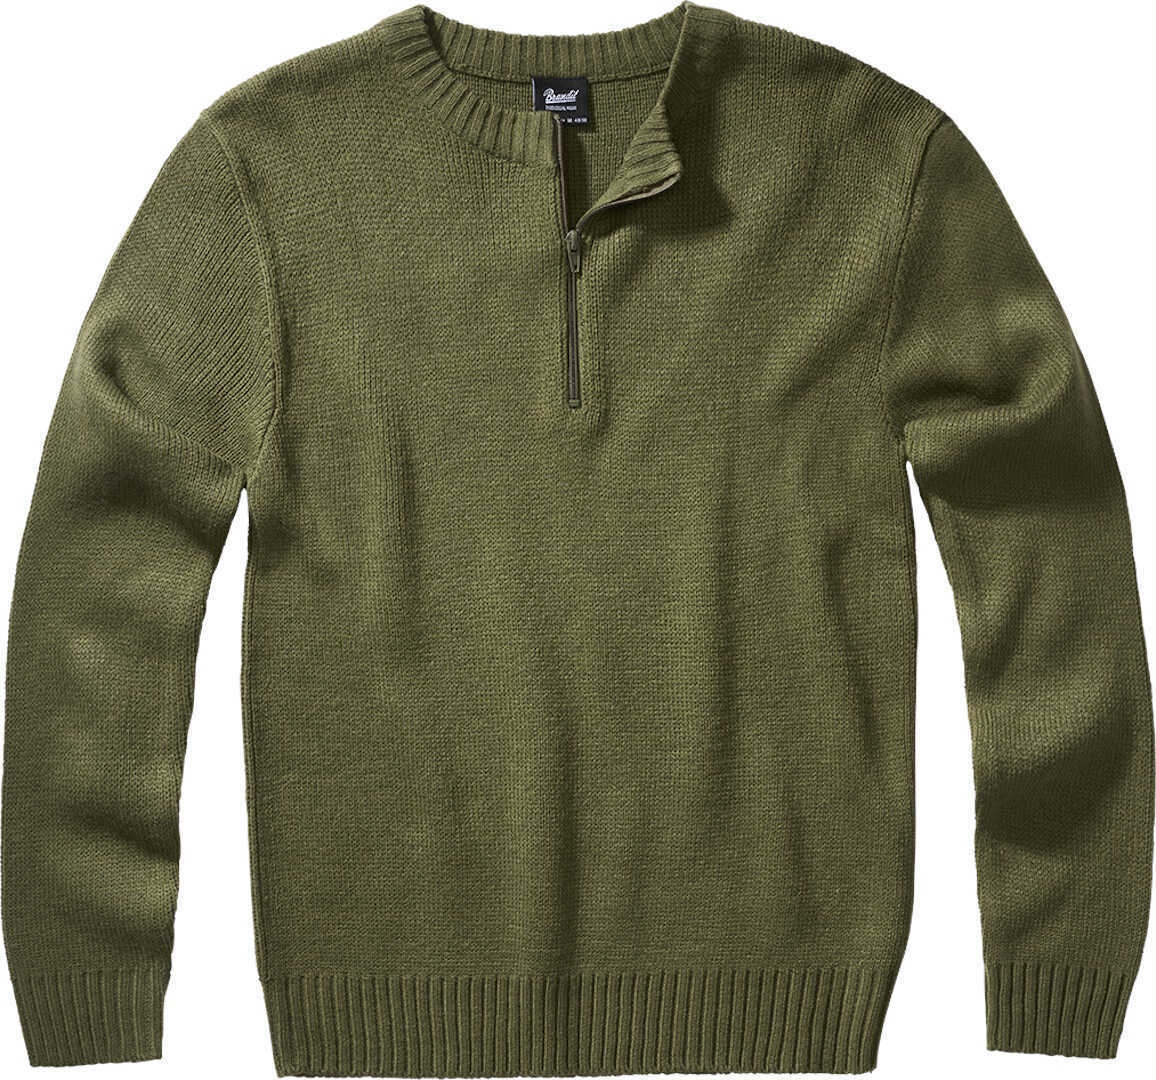 Brandit Armee Pullover, groen, S